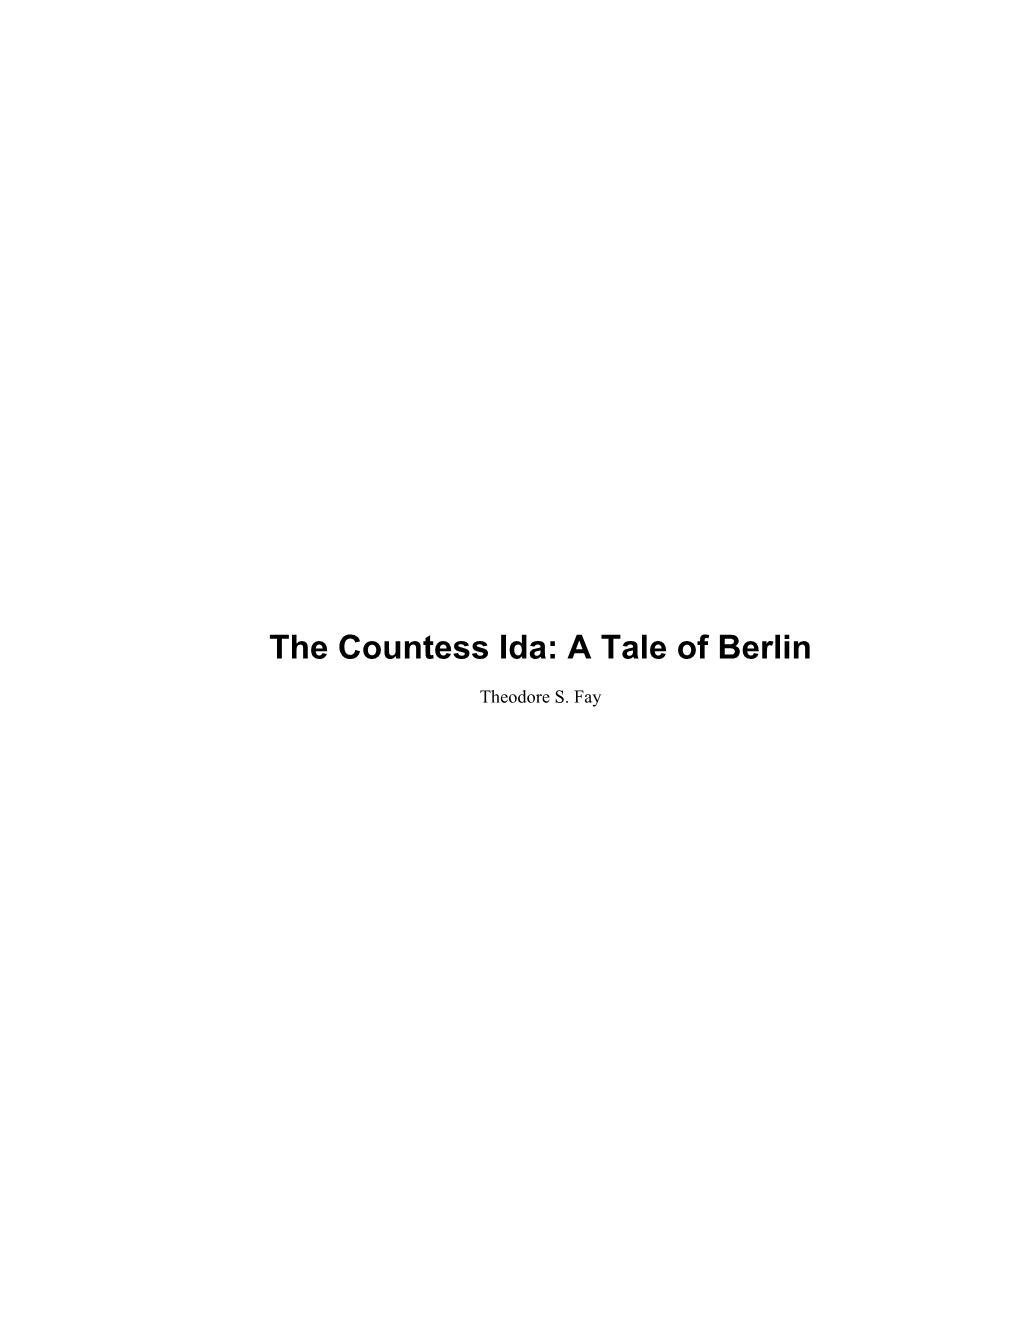 The Countess Ida: a Tale of Berlin